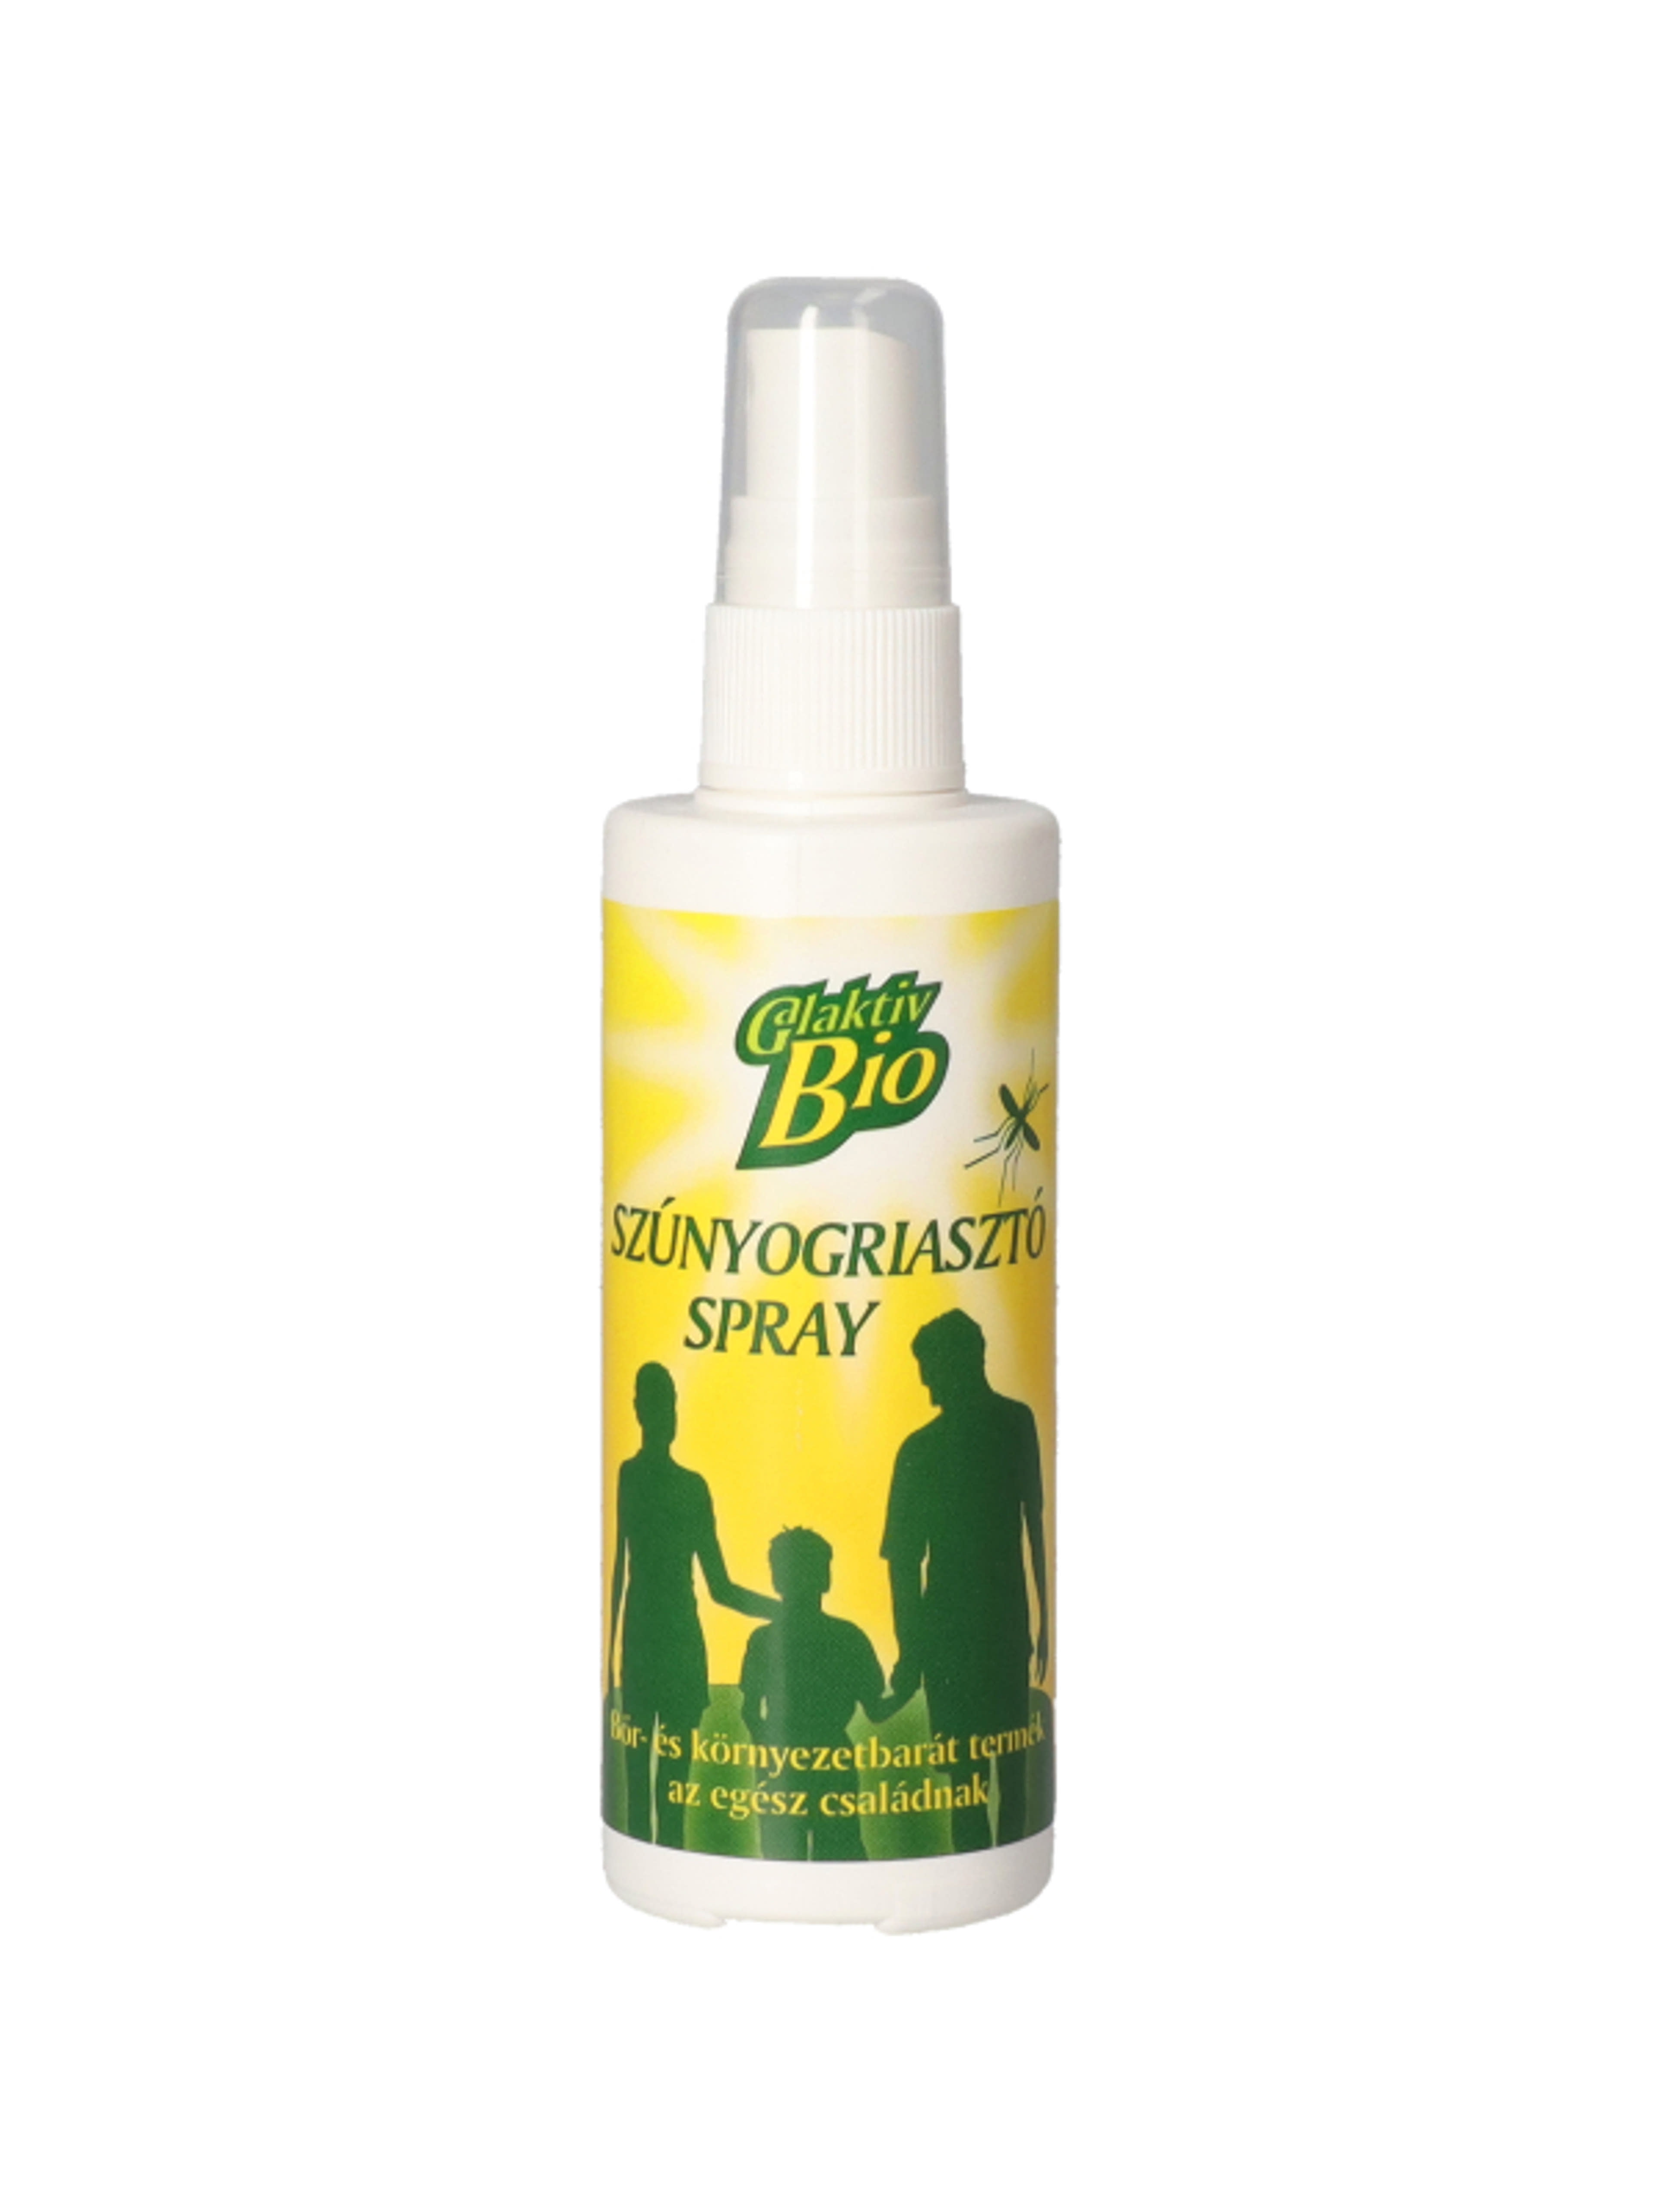 Galaktiv Bio Szúnyogírtó Spray - 100 ml